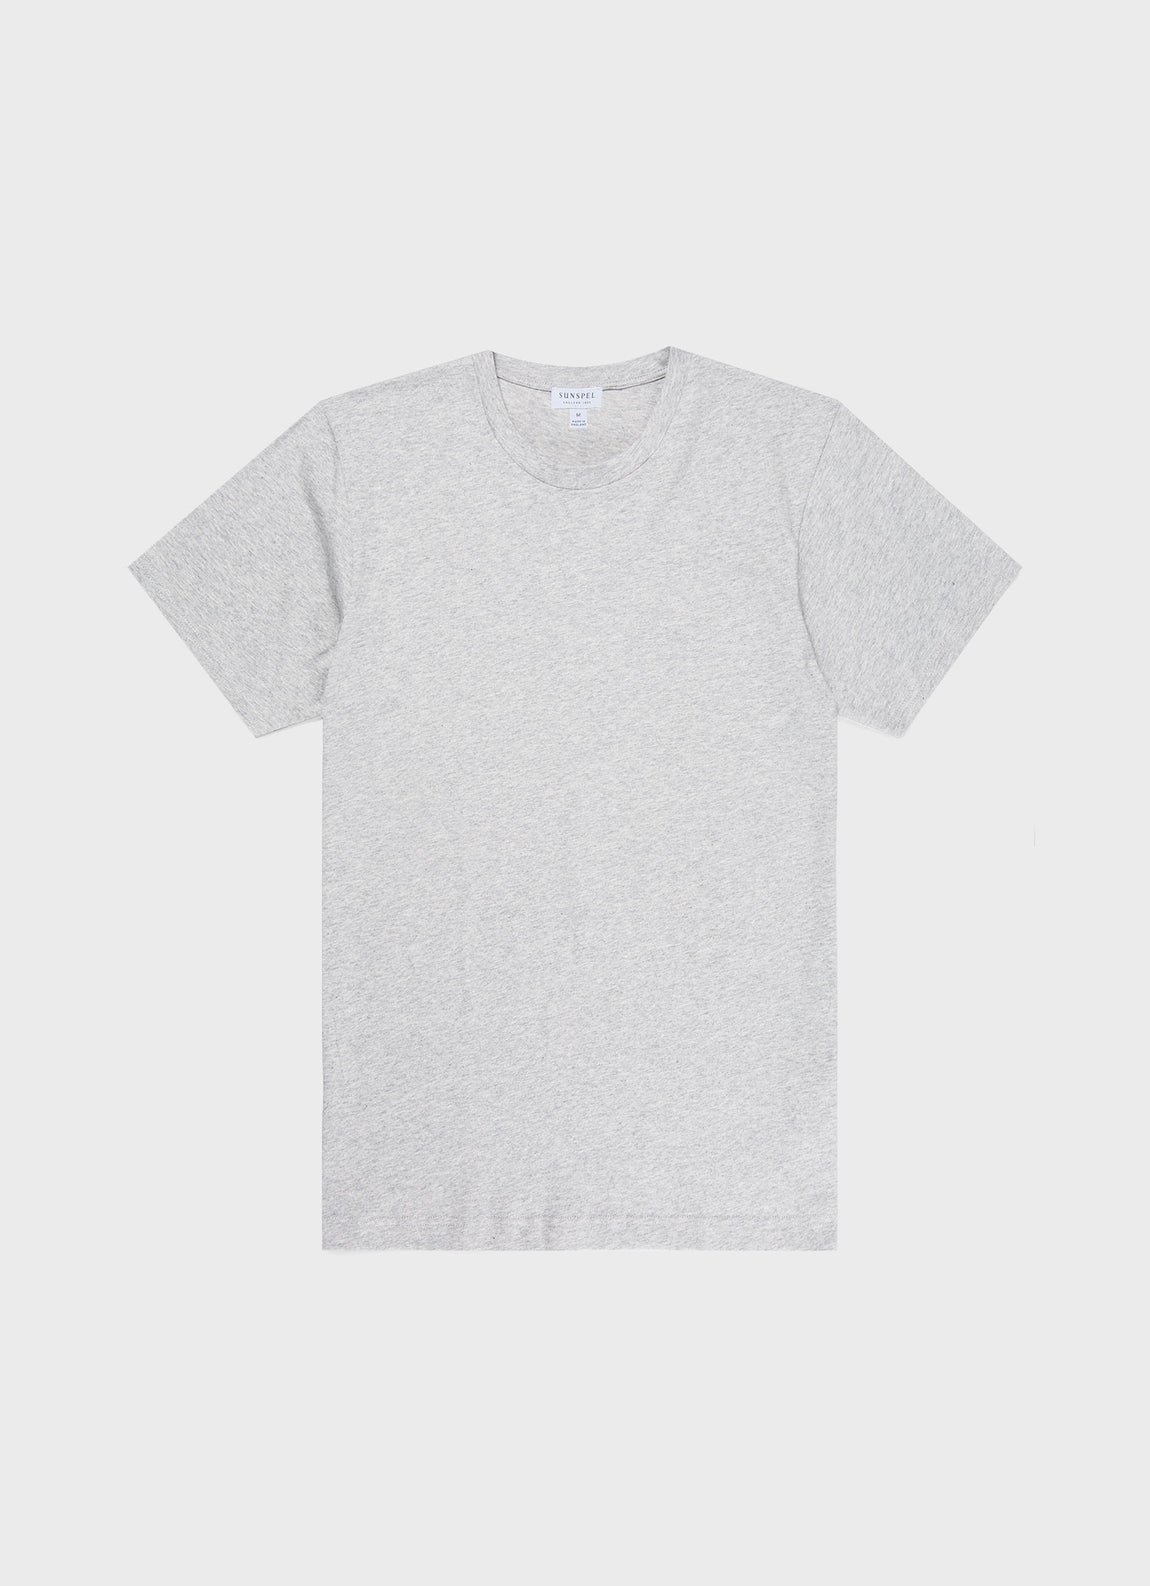 Men's Riviera Midweight T-shirt in Grey Melange | Sunspel